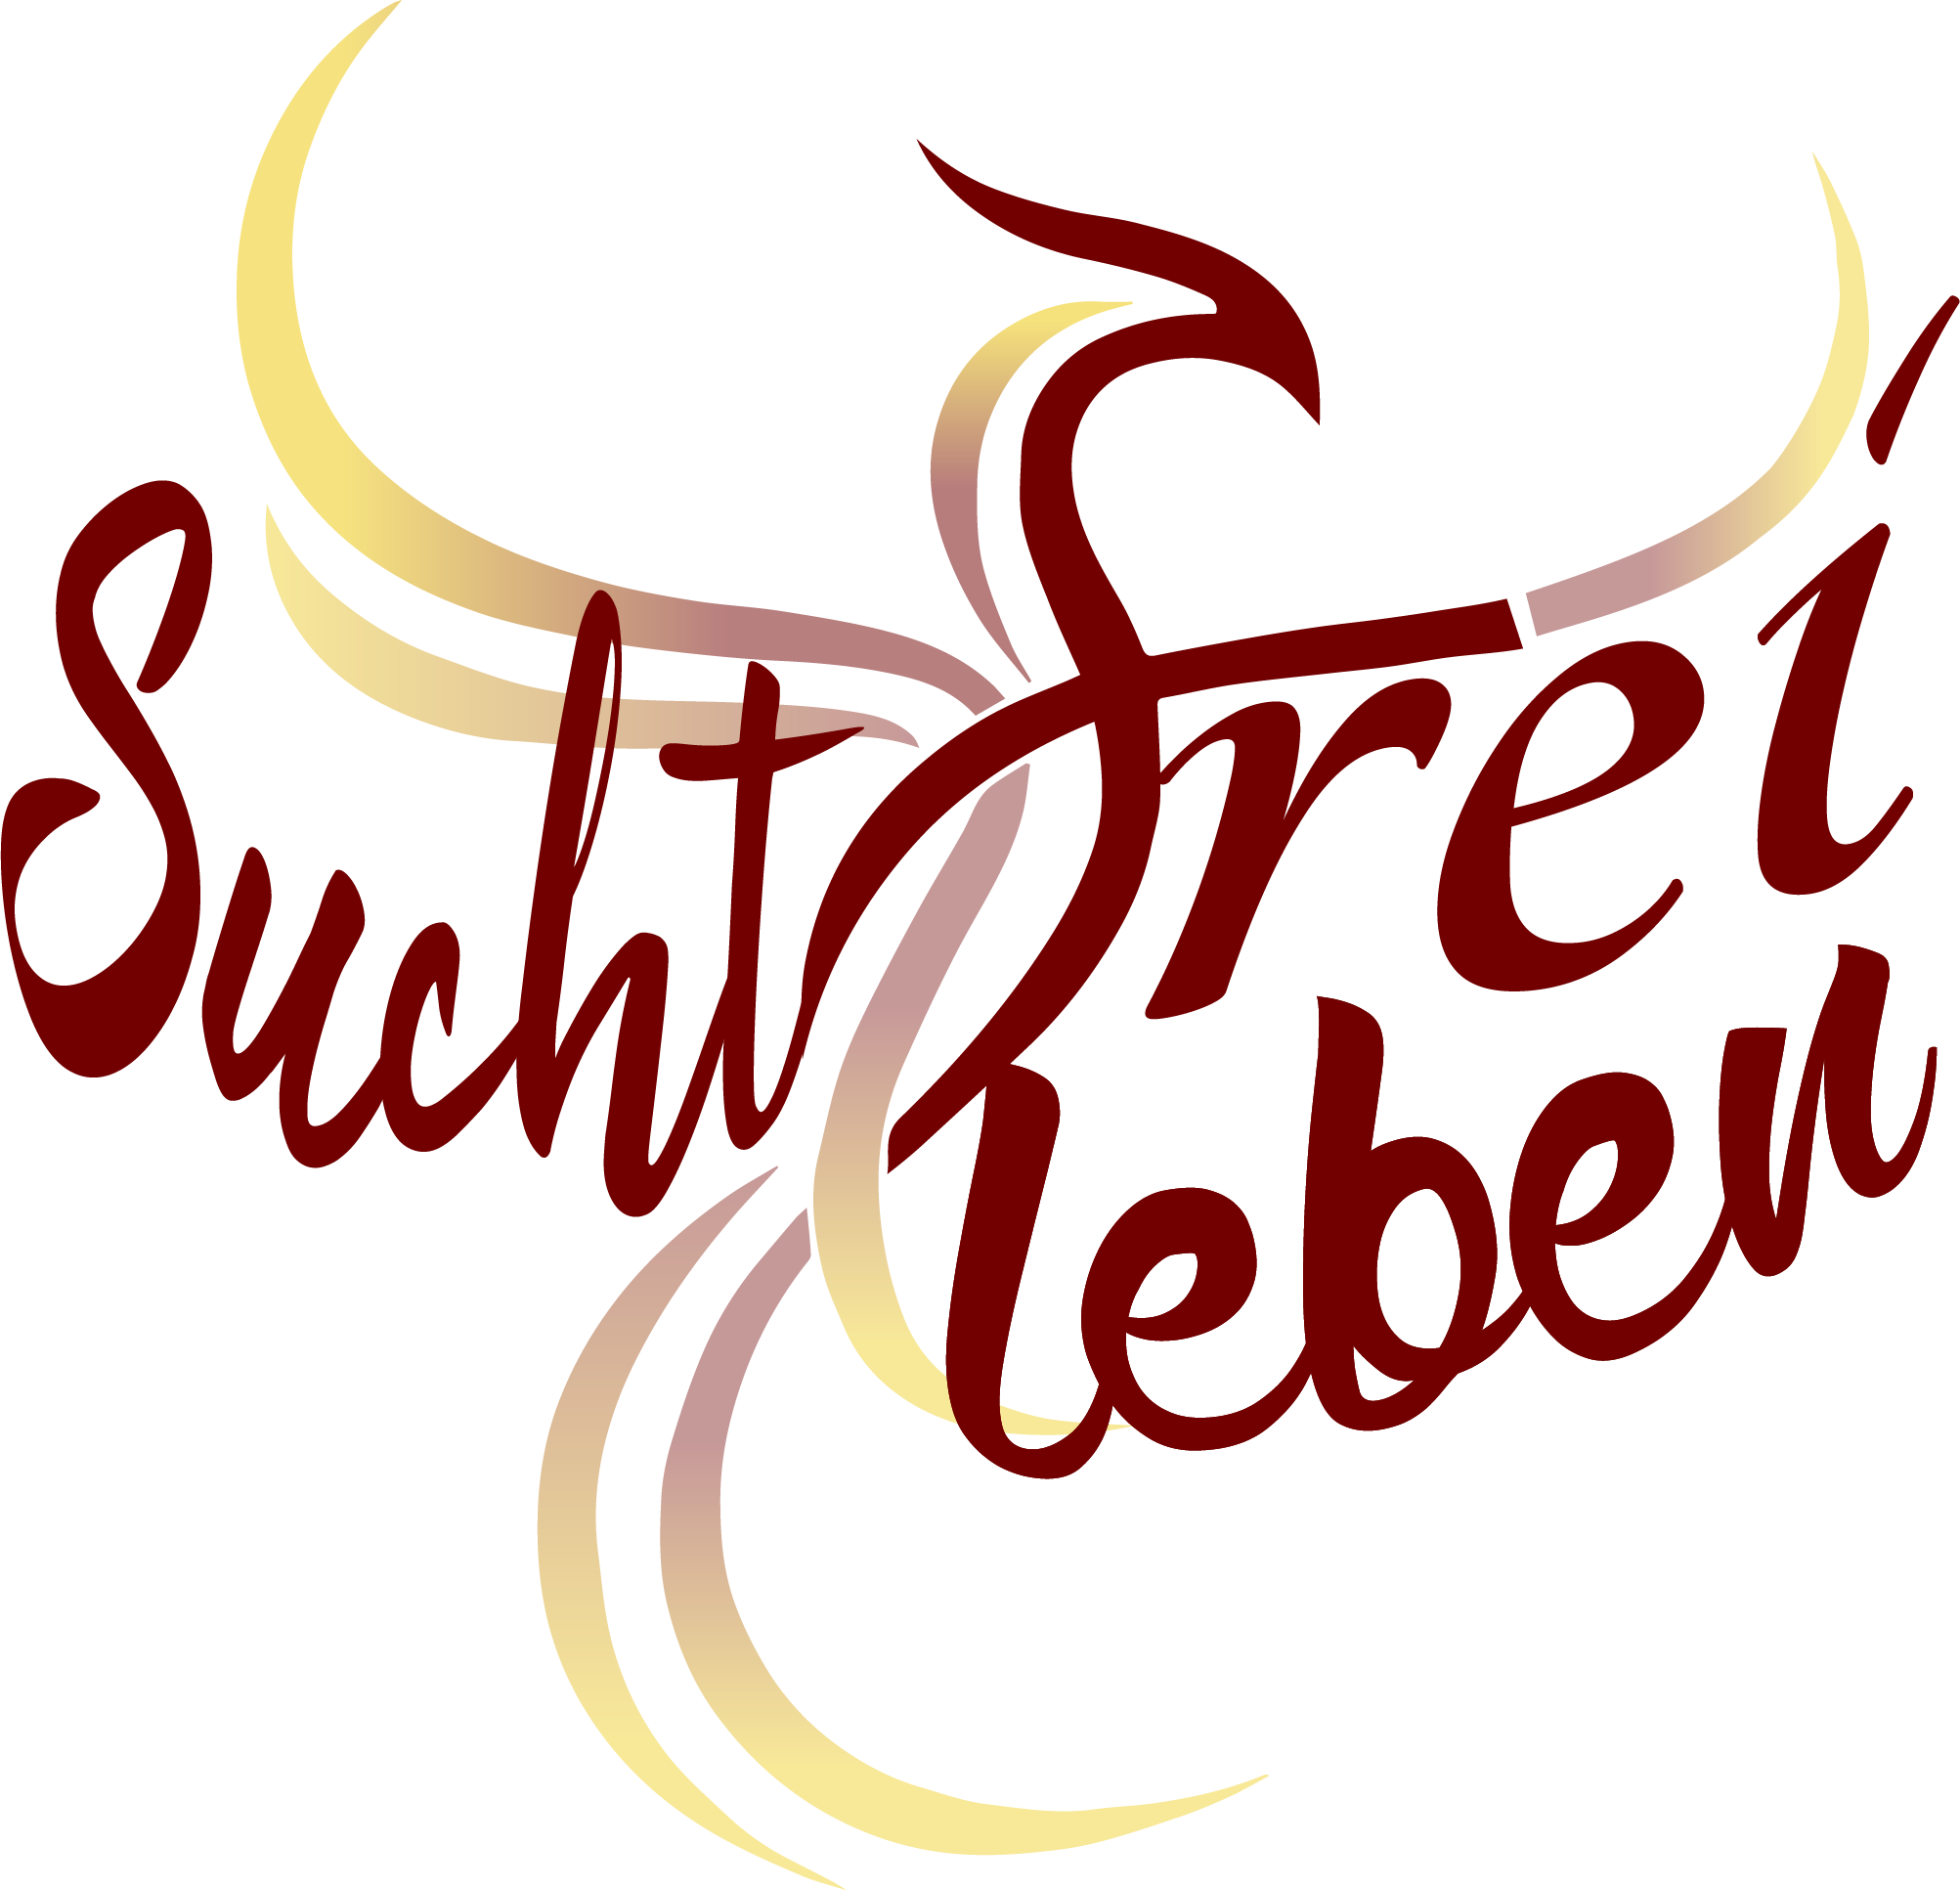 Logo-suchtfrei-leben-Blog